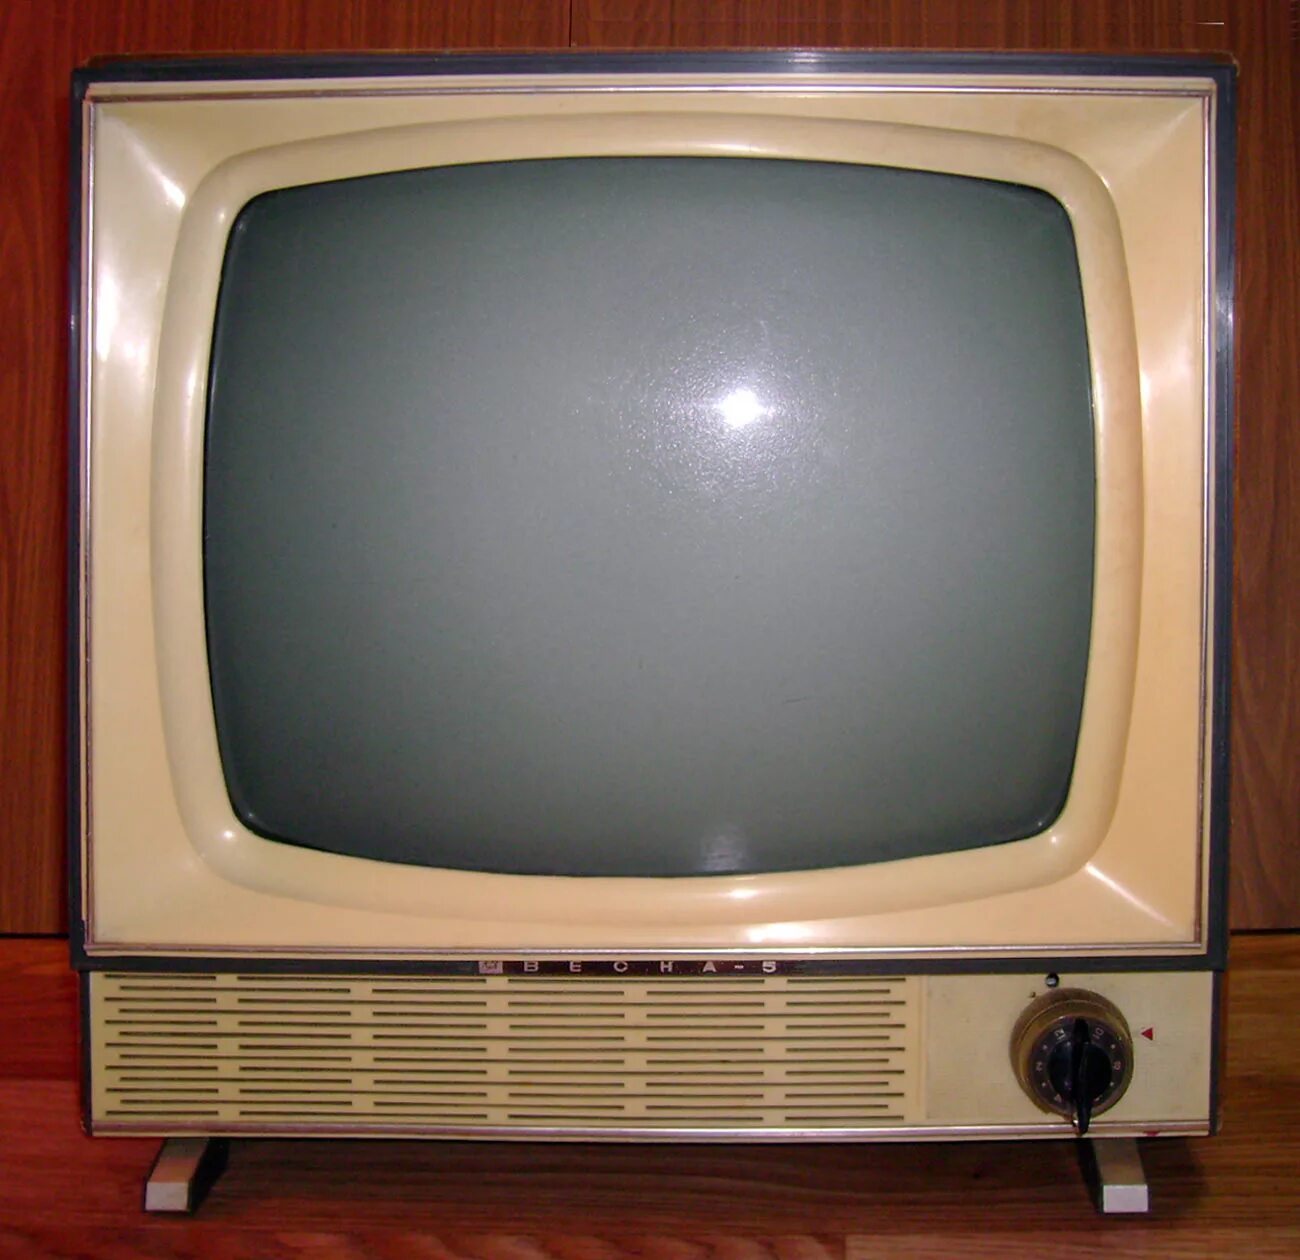 Телевизор Рубин 102. Рекорд 304 телевизор. Советский телевизор Рубин 102.